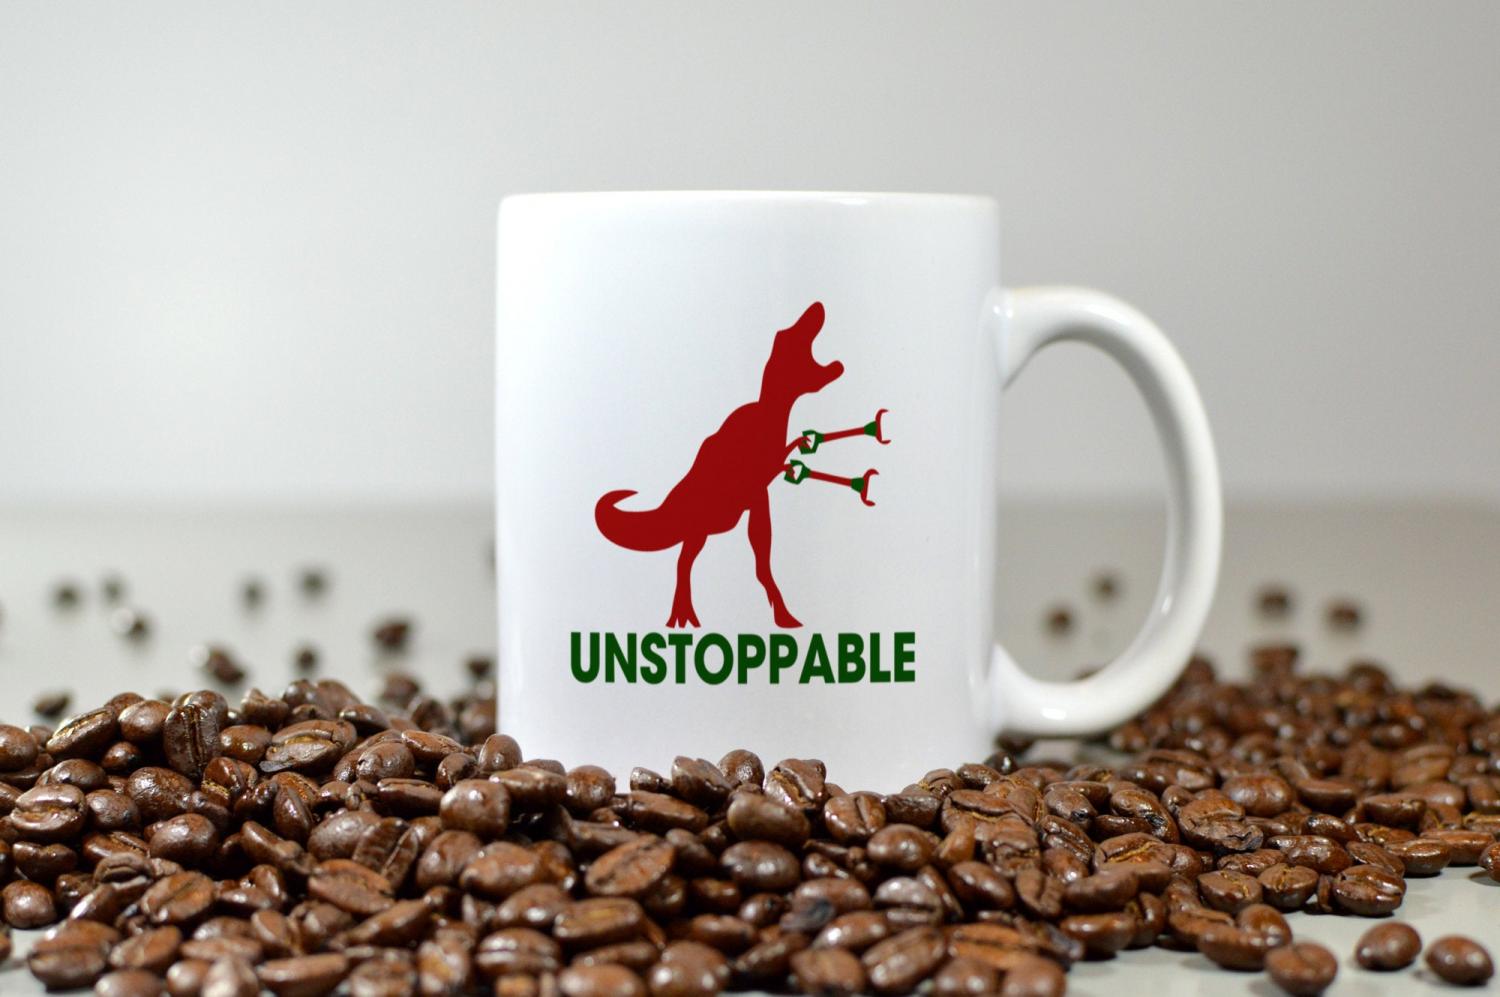 Funny T-Rex Coffee Mugs - Funny Dinosaur coffee mugs